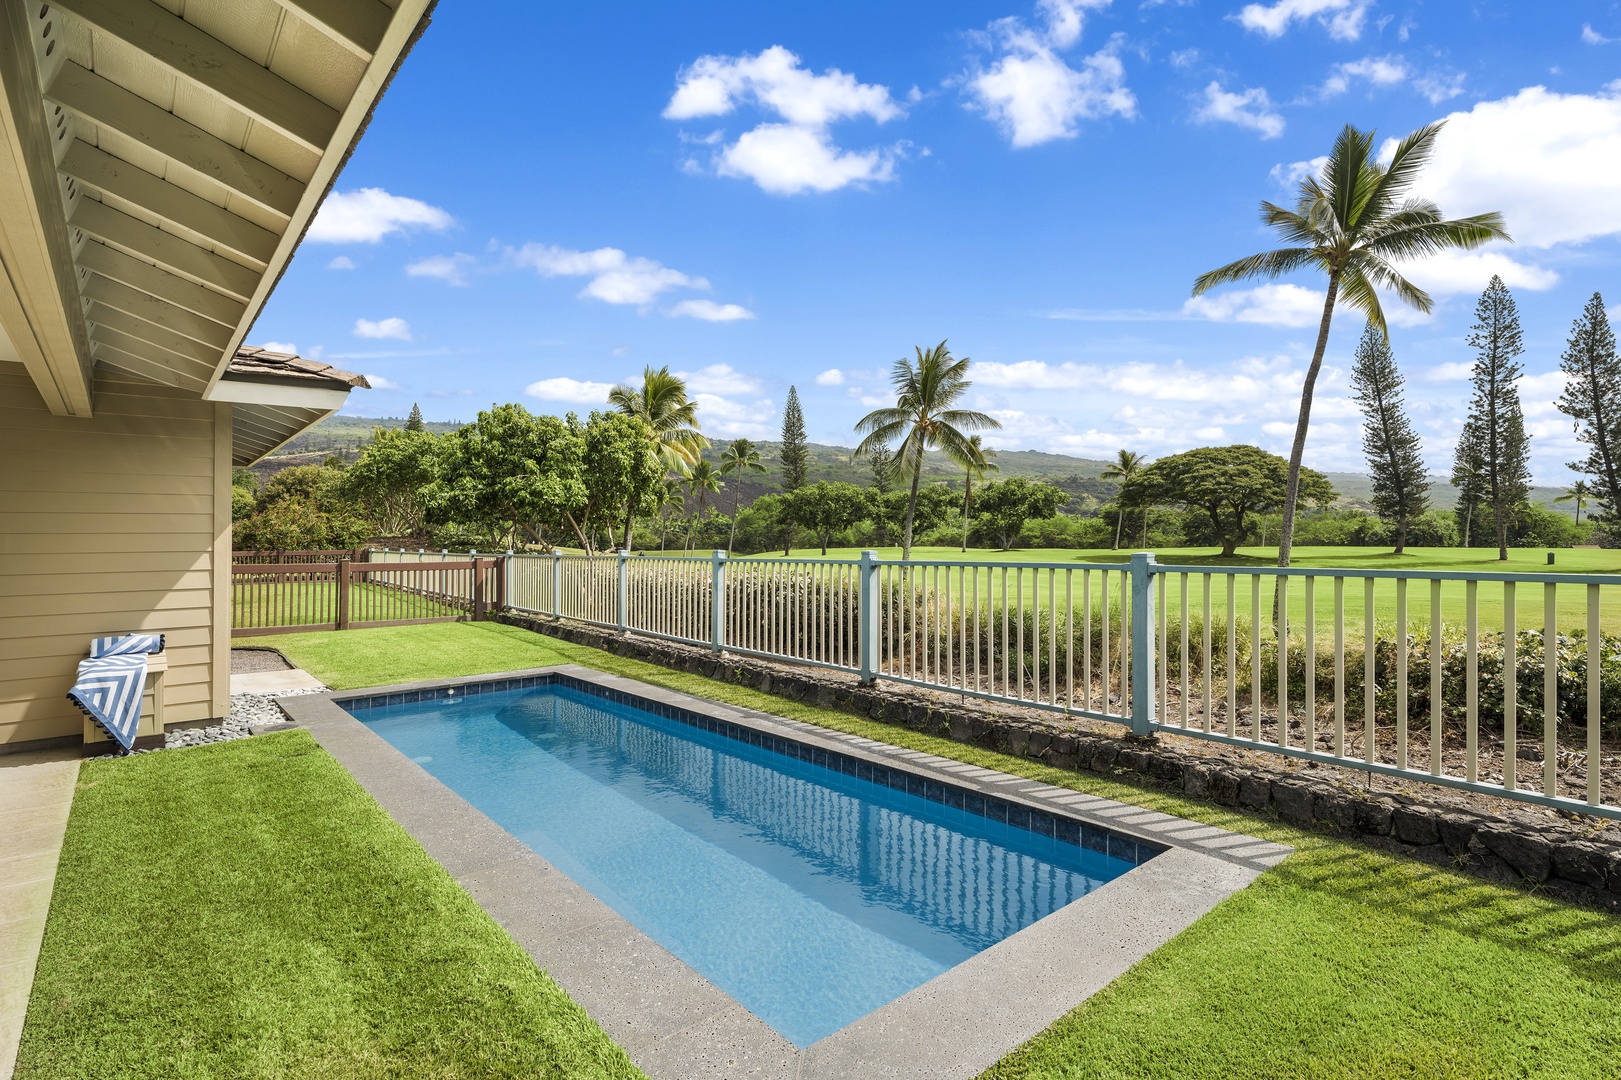 Kailua-Kona Vacation Rentals, Holua Kai #8 - Pool